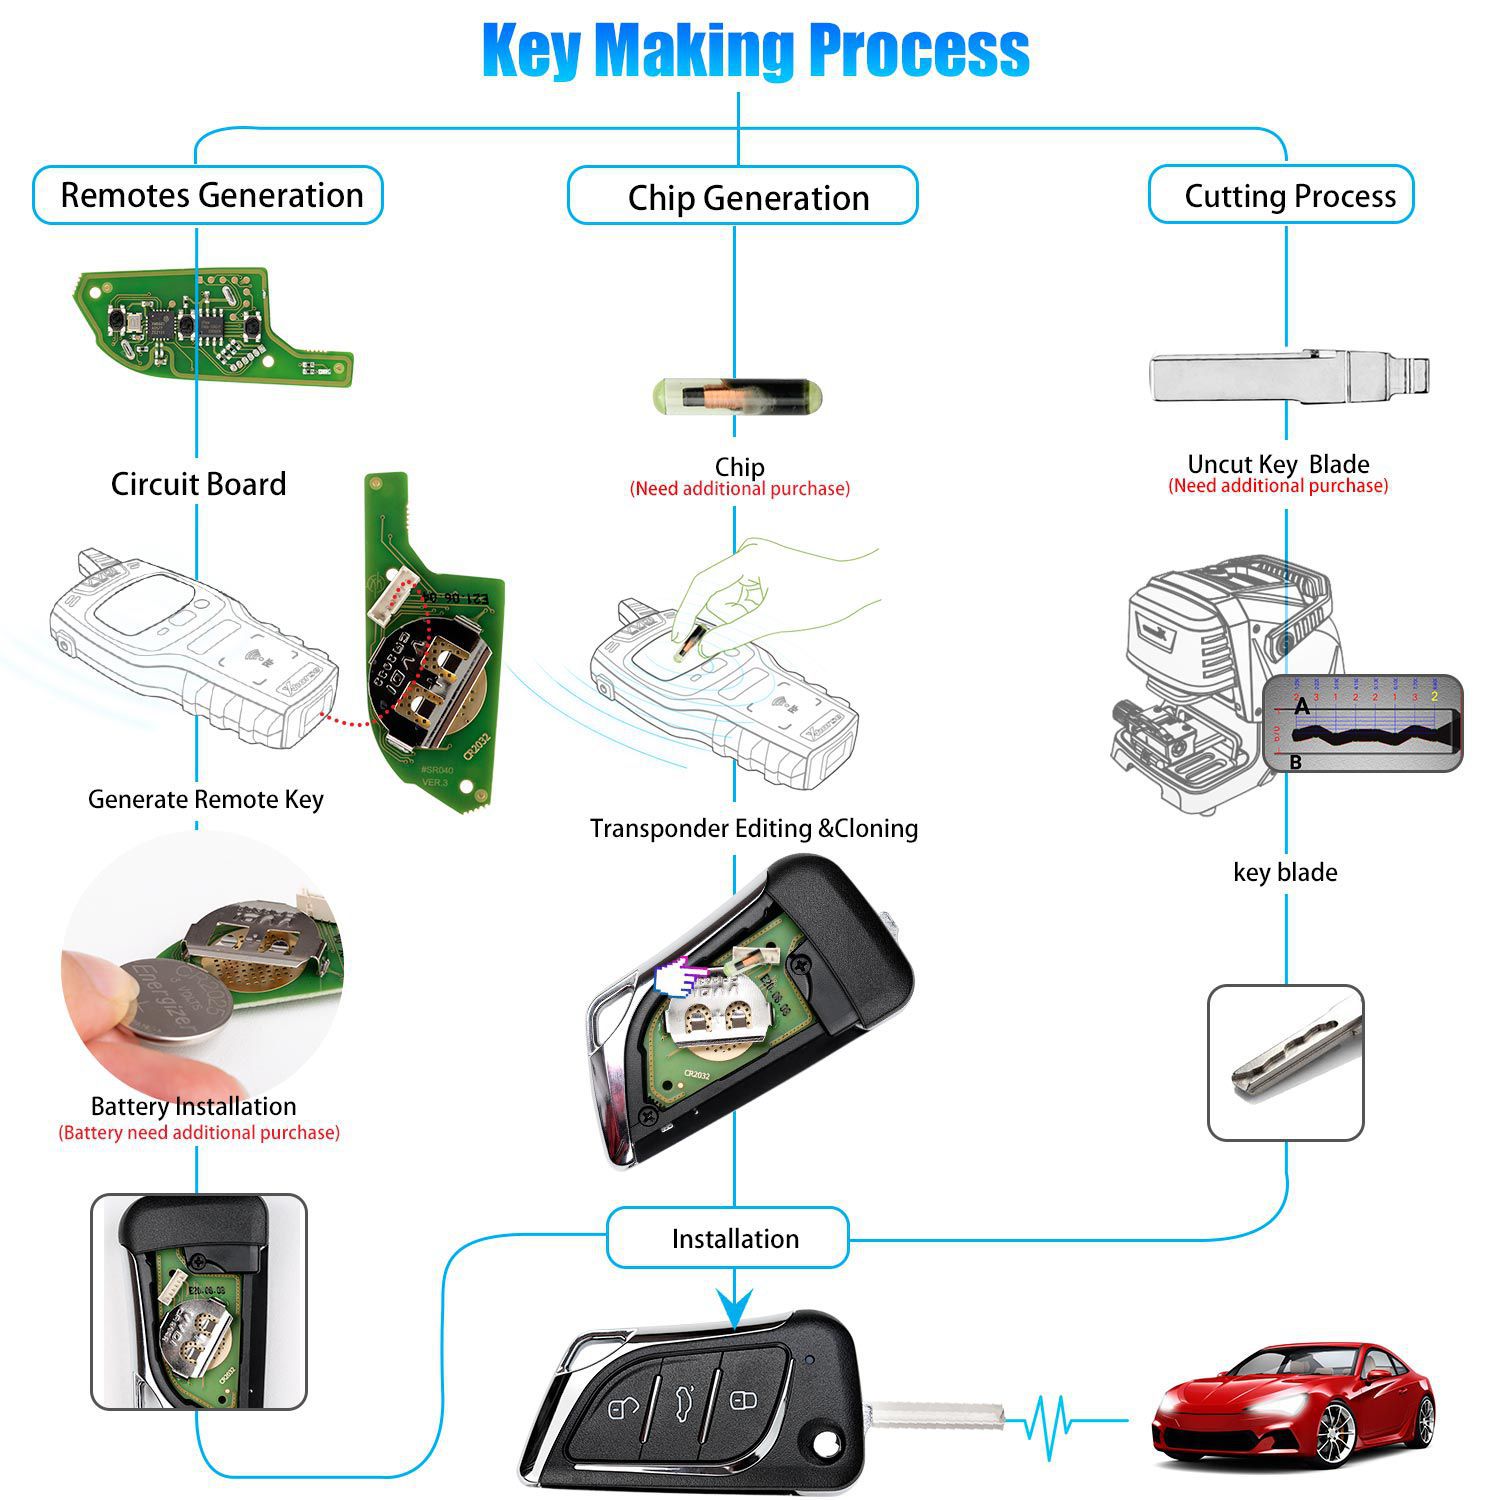 Xhorse XKLKS0EN Wire Remote Key für Lexus Typ 5pcs/lot